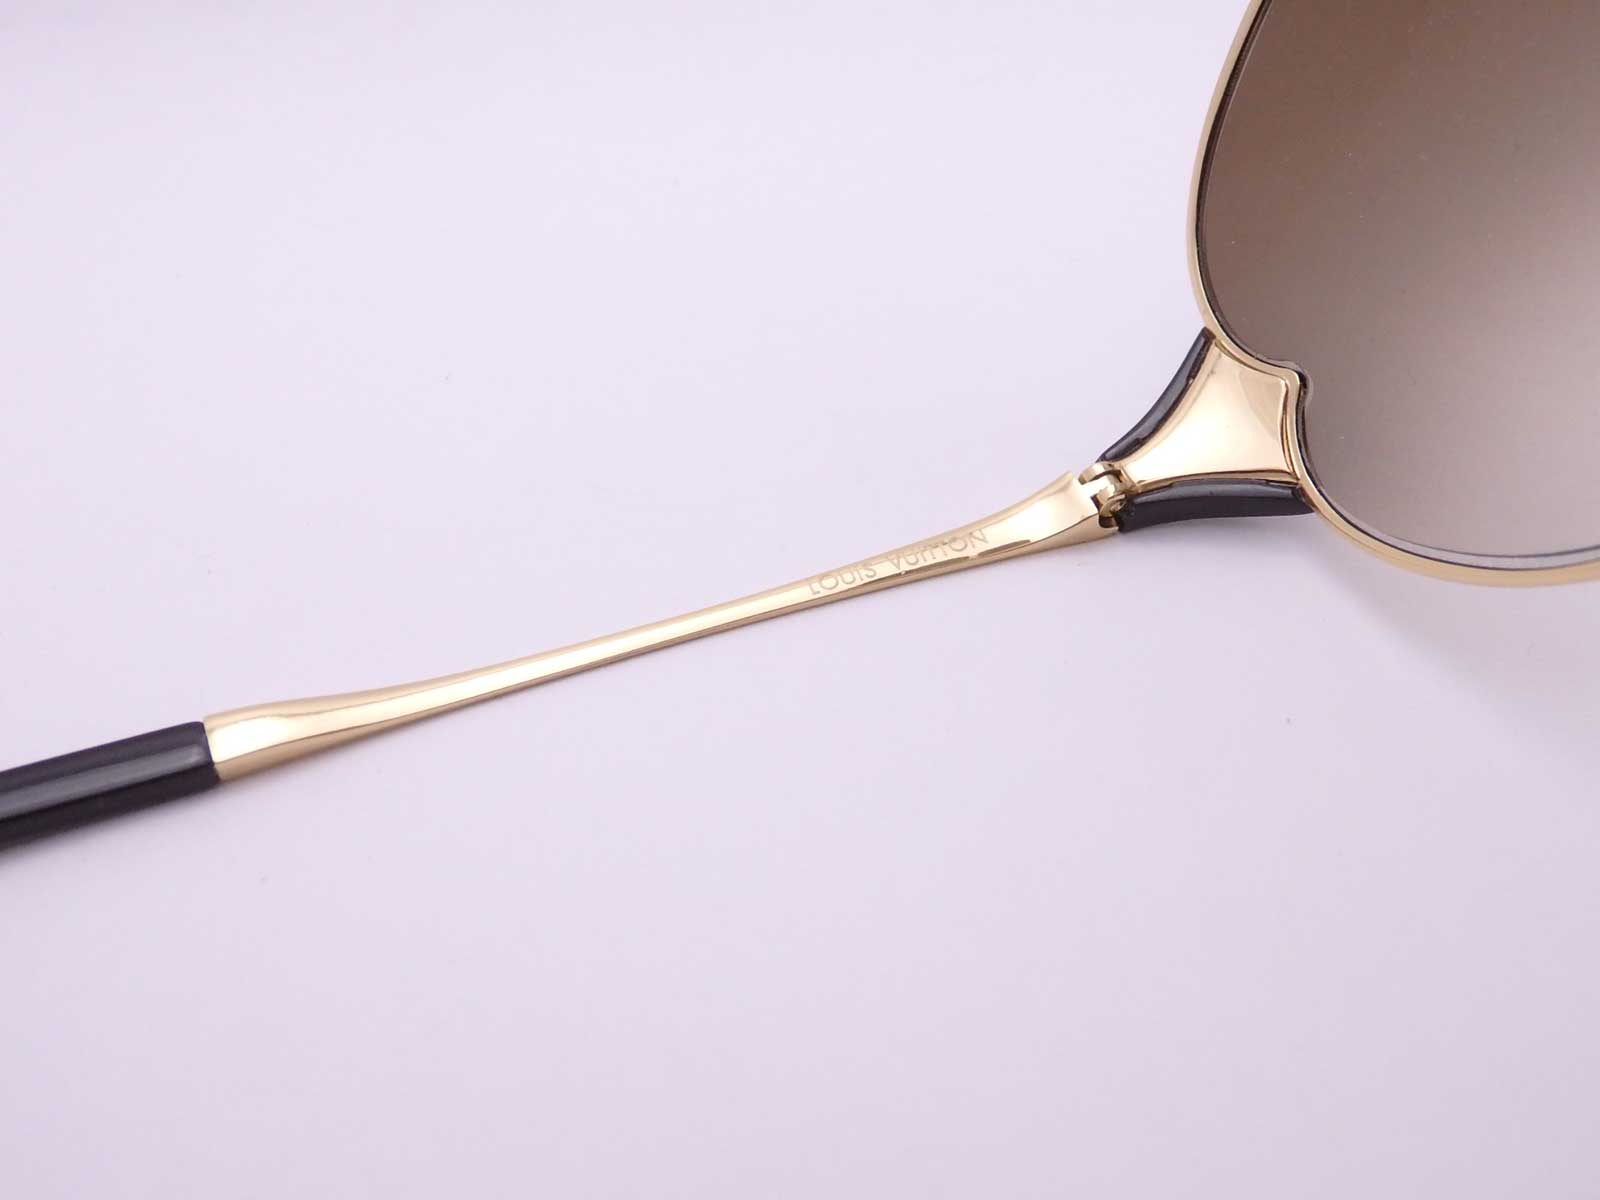 Auth Louis Vuitton Sunglasses Brown-Non-Polarized Goldtone Metal w/Case e44879c | eBay